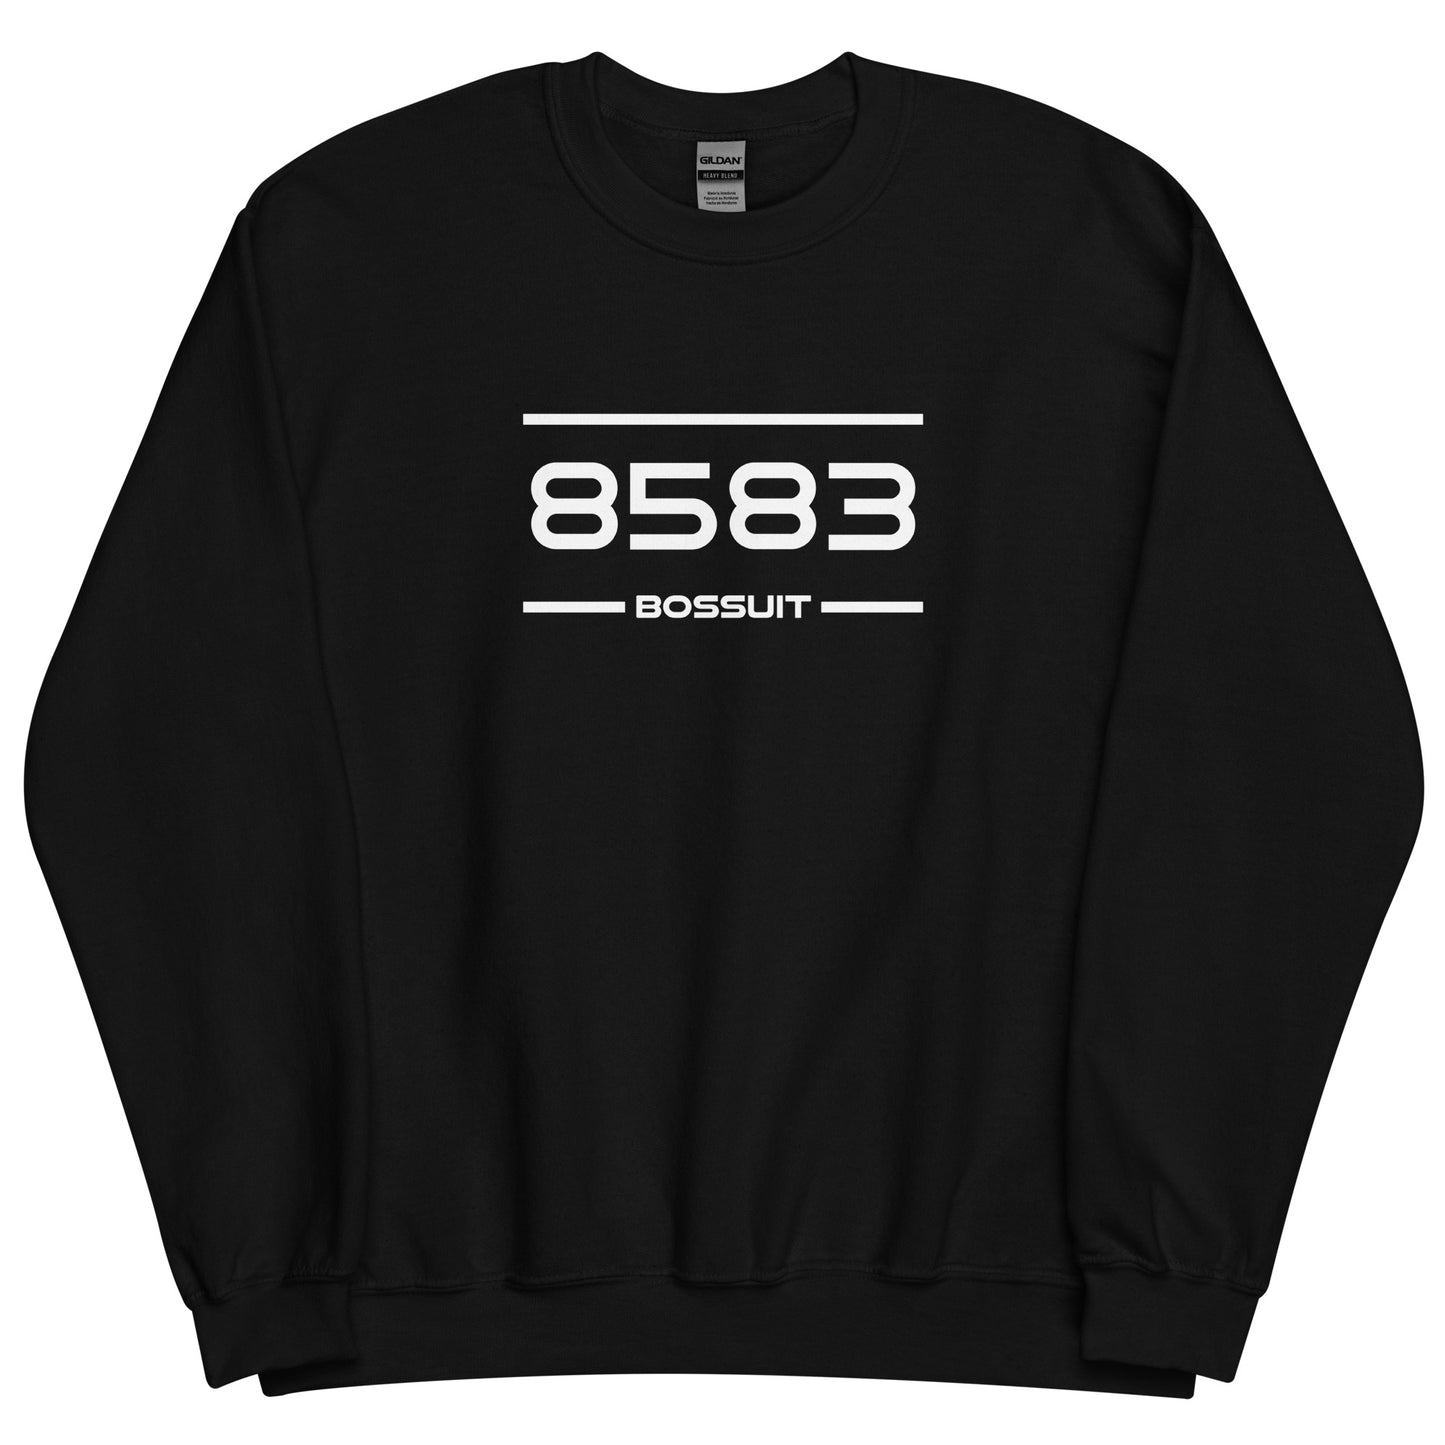 Sweater - 8583 - Bossuit (M/V)